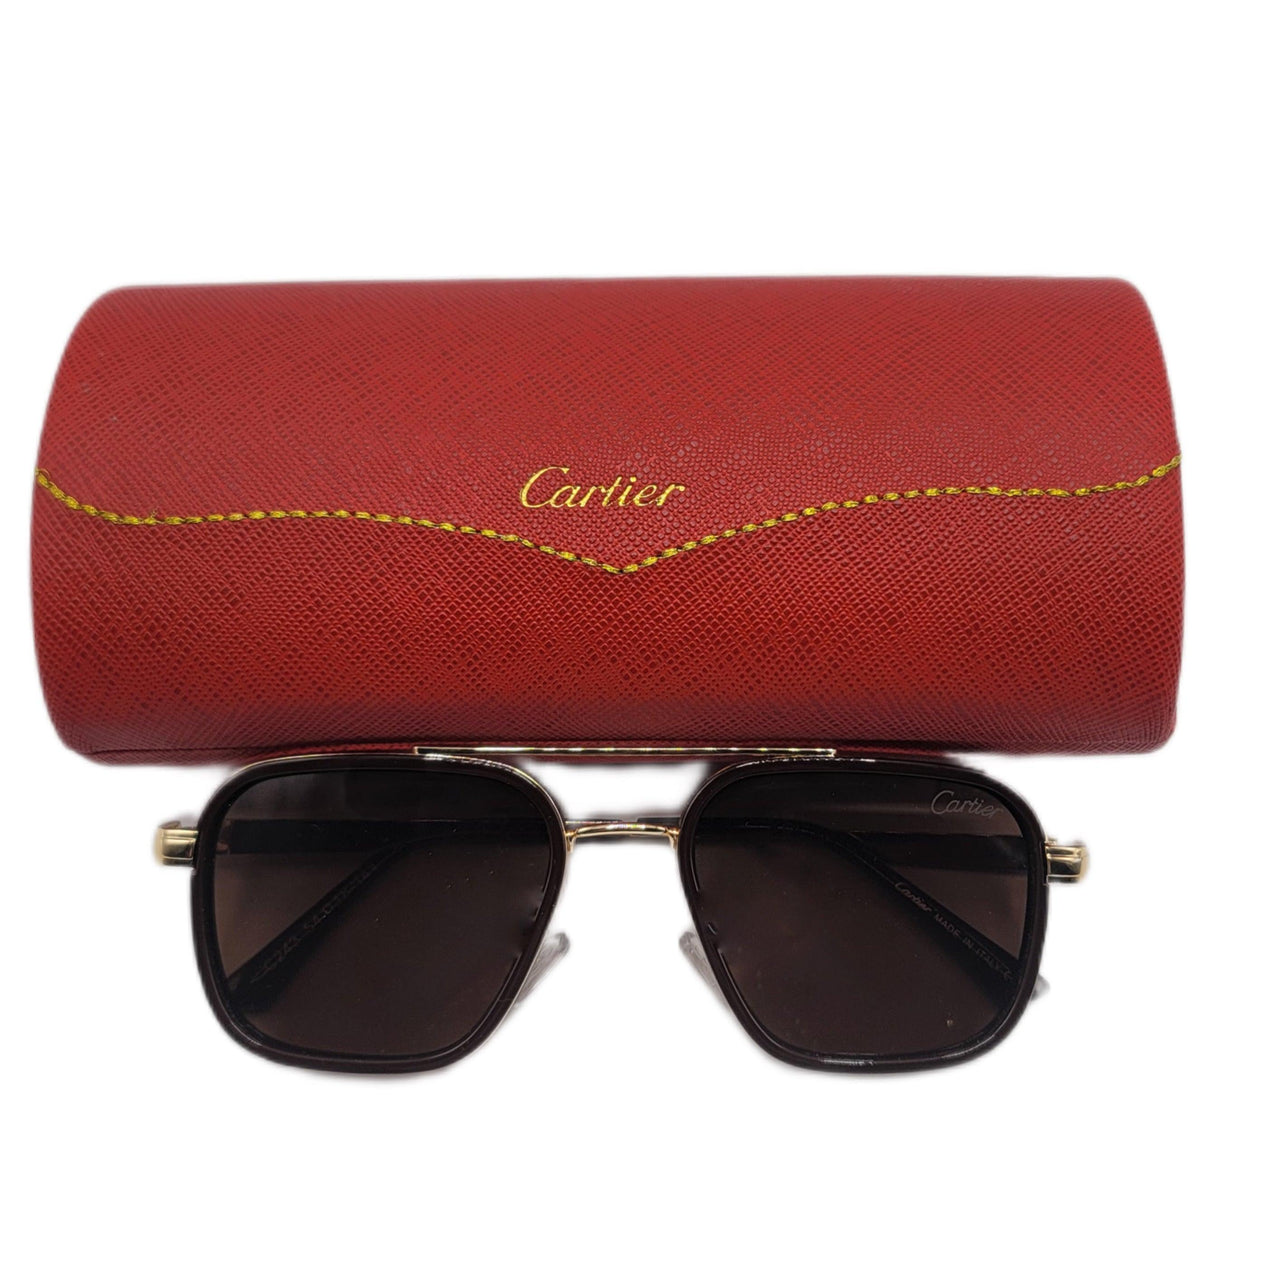 The Bag Couture Sunglasses Cartier Sunglasses 1